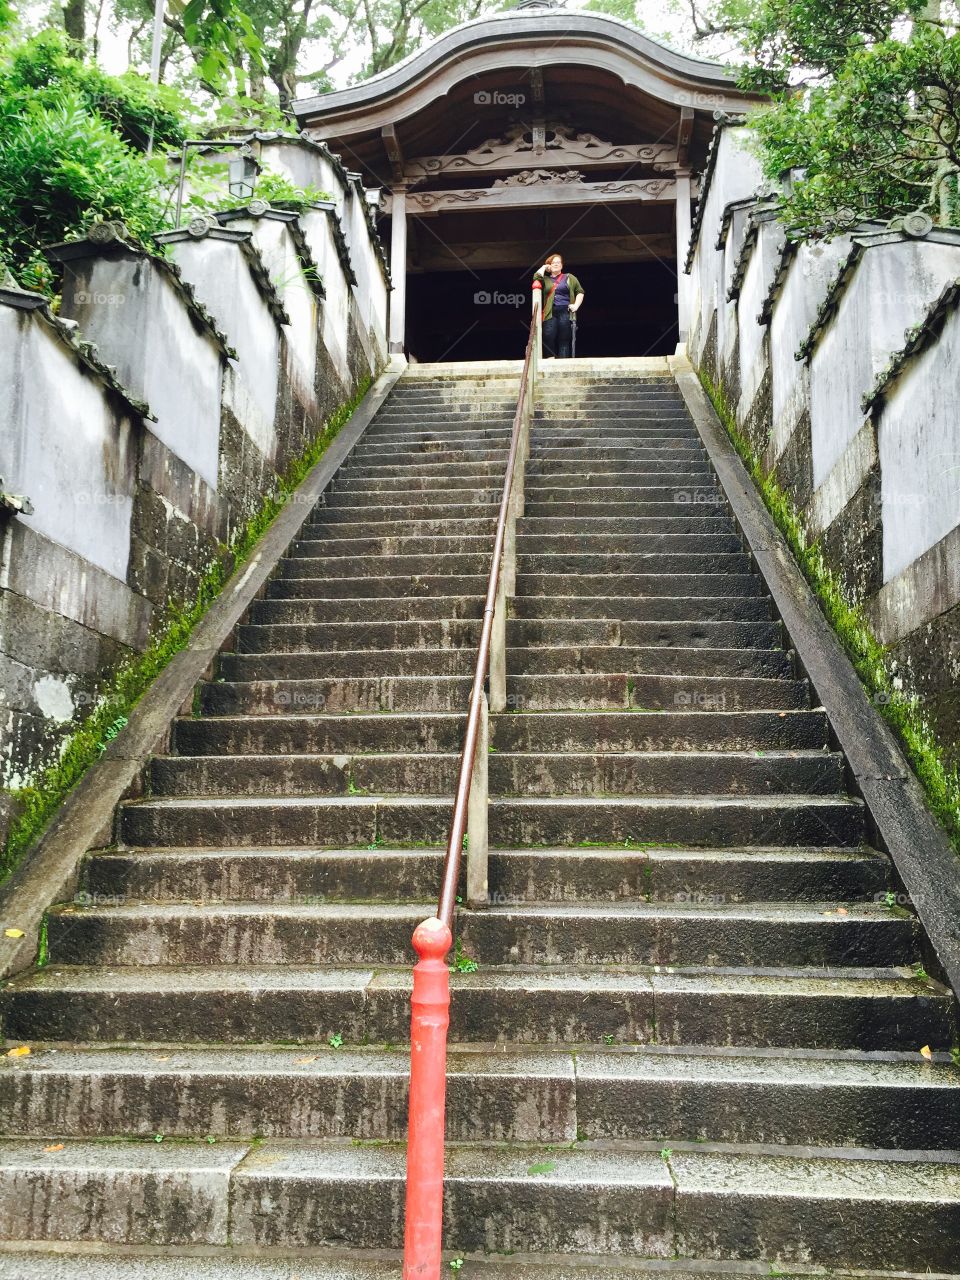 Temple steps